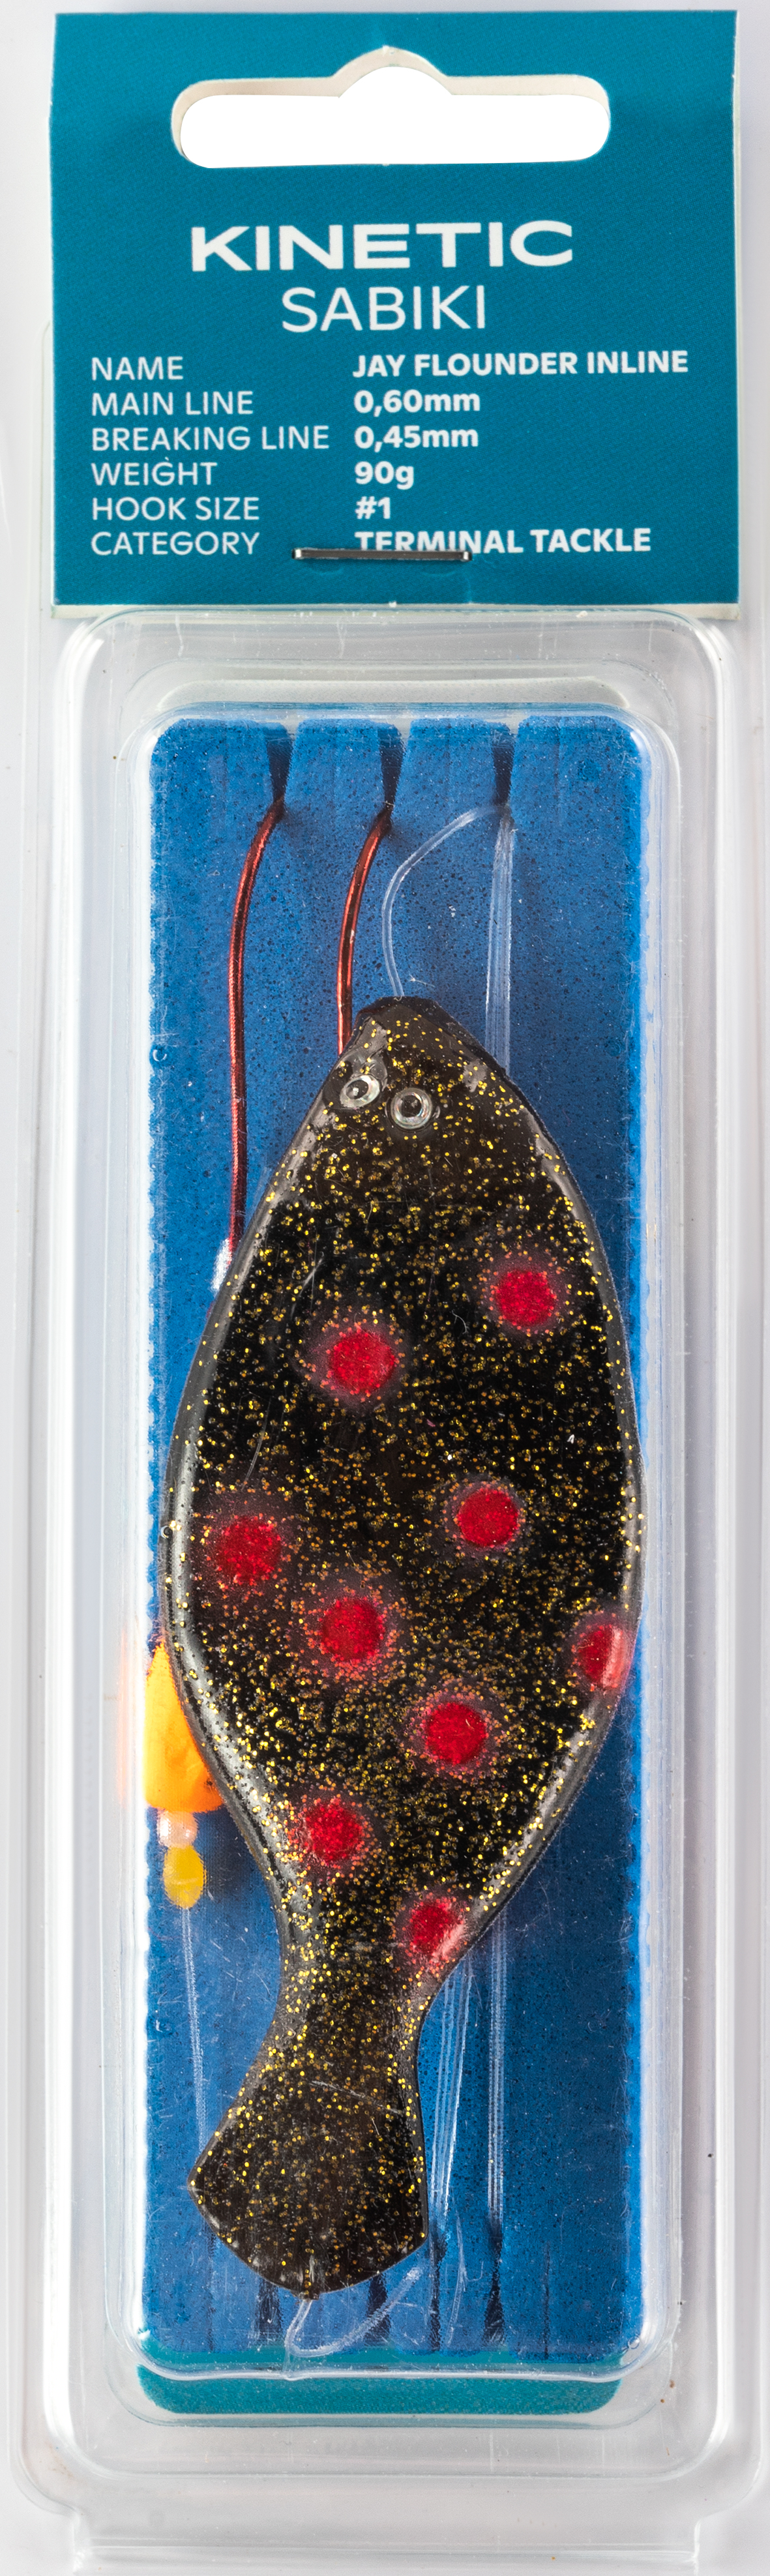 Rakendus KINETIC Jay Flounder Inline 90g #1 Black/Red Dots